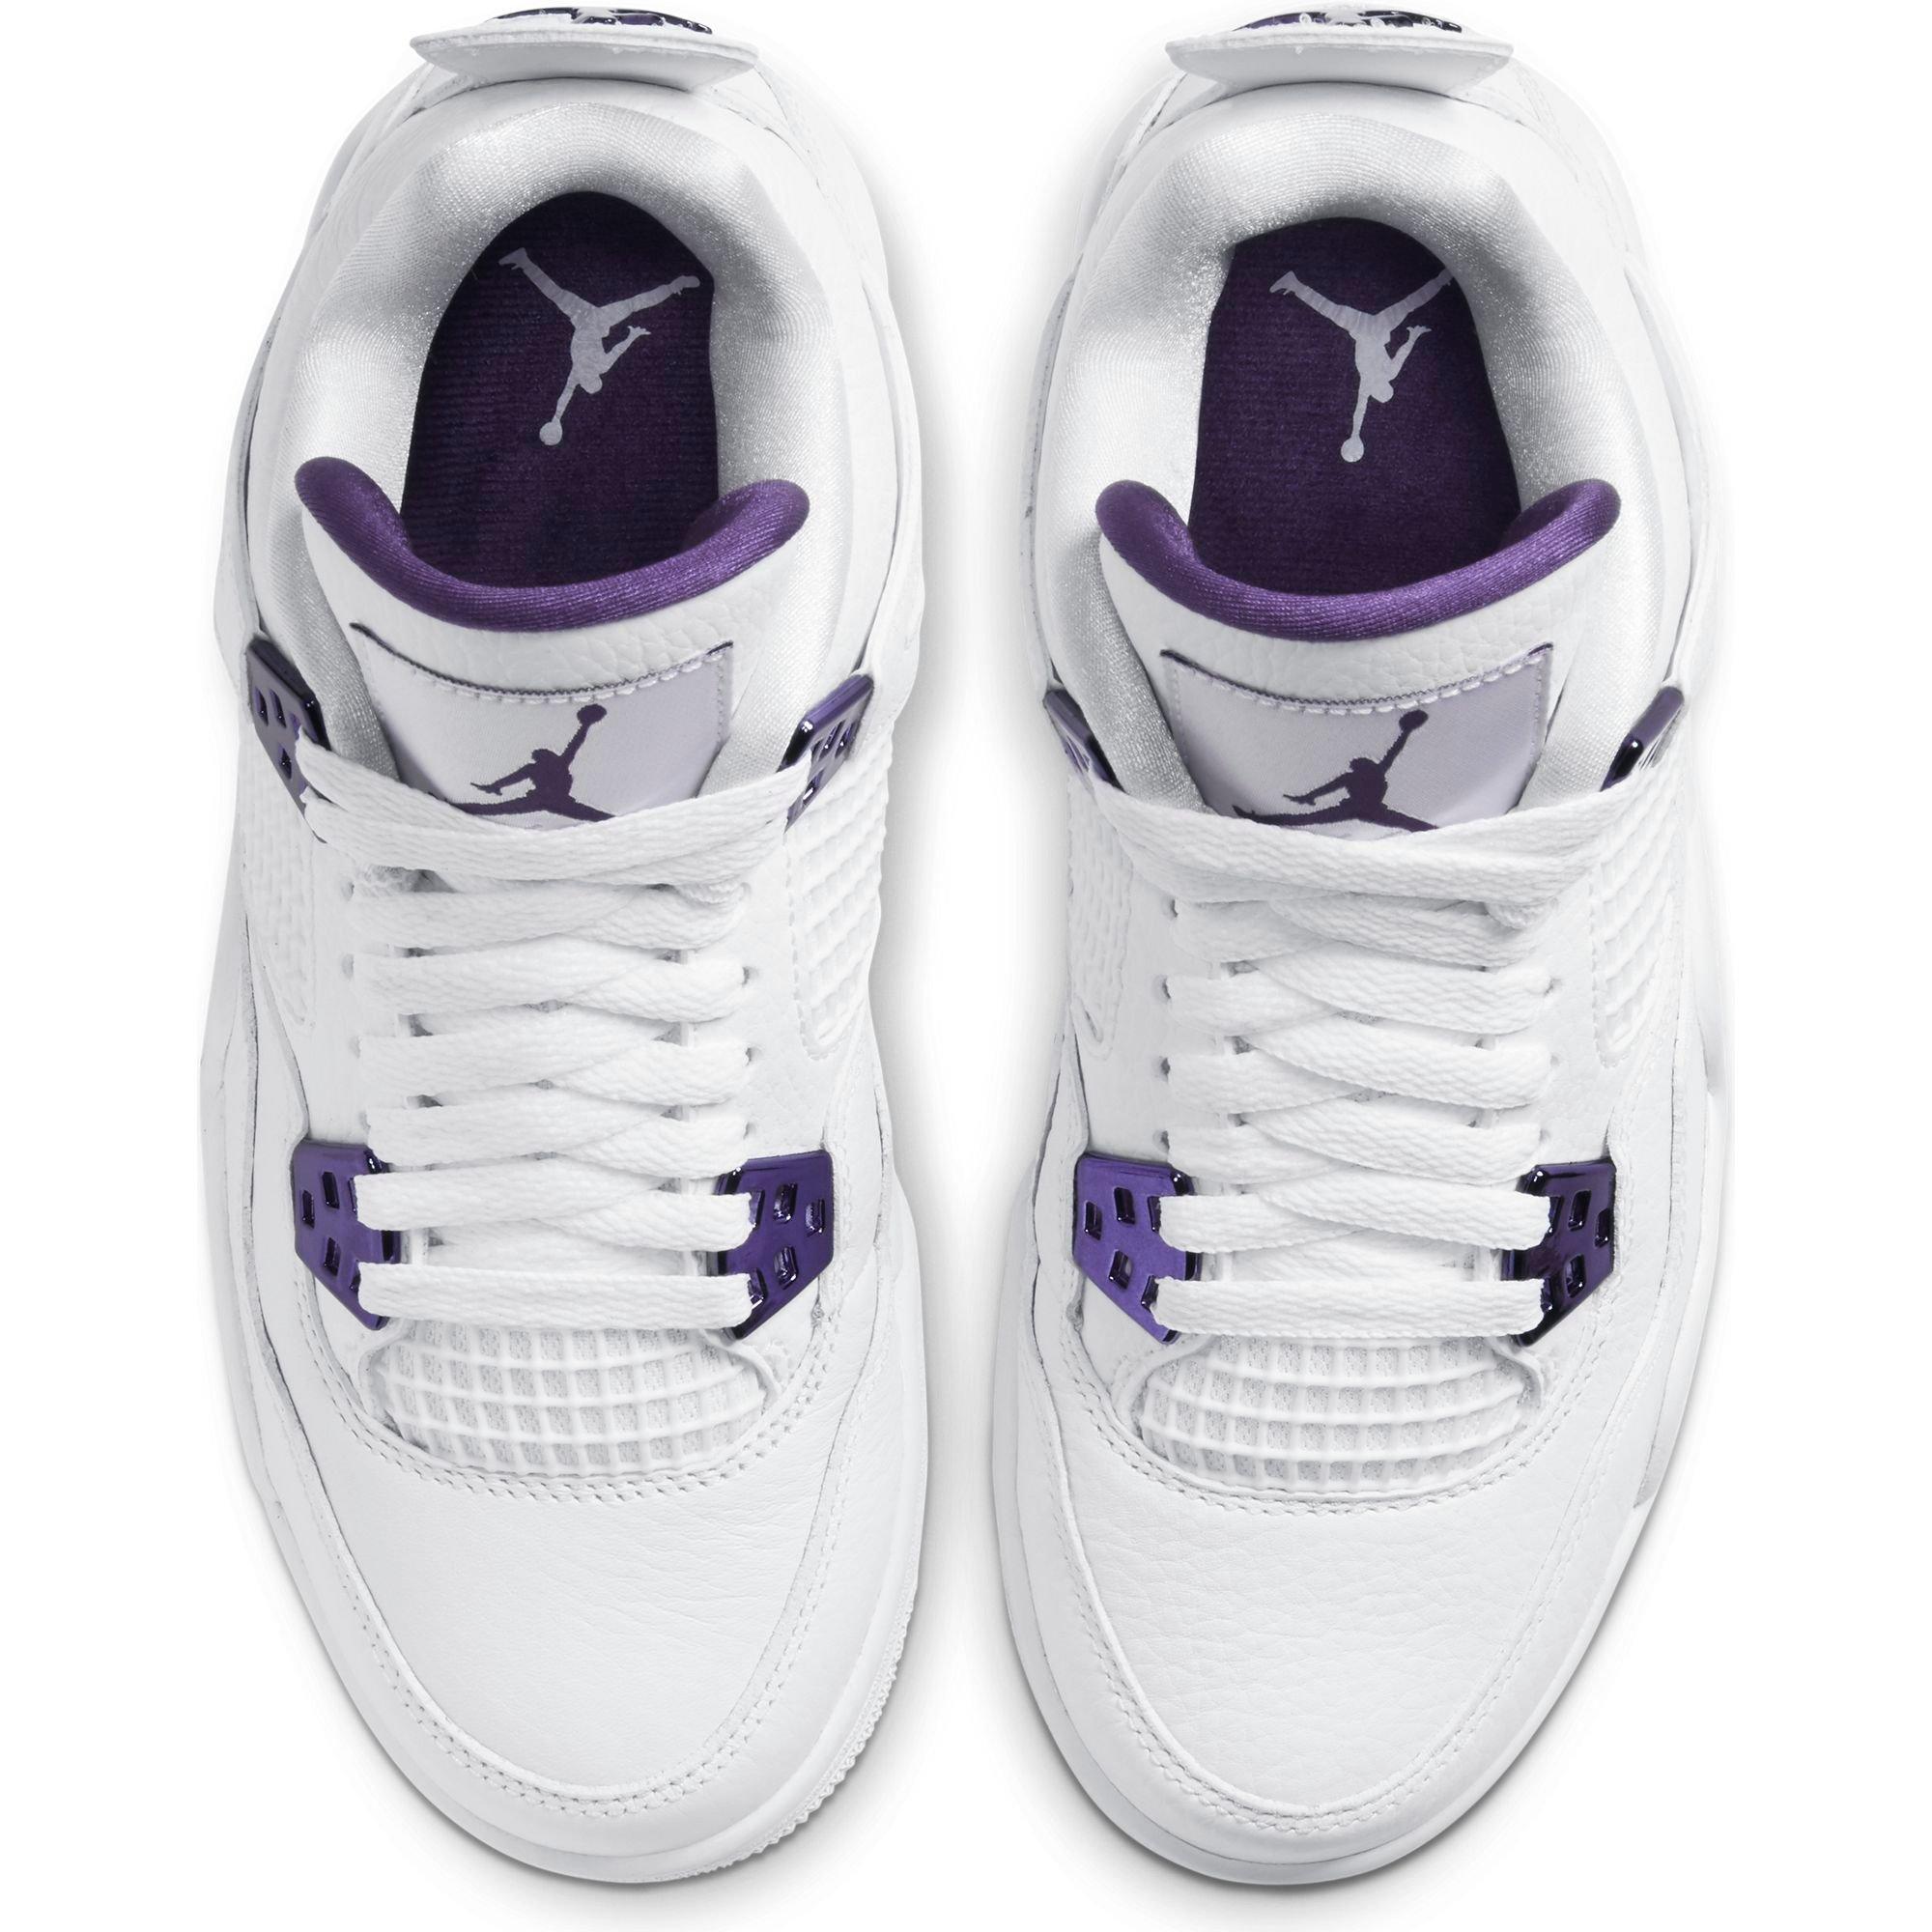 white and purple 4s